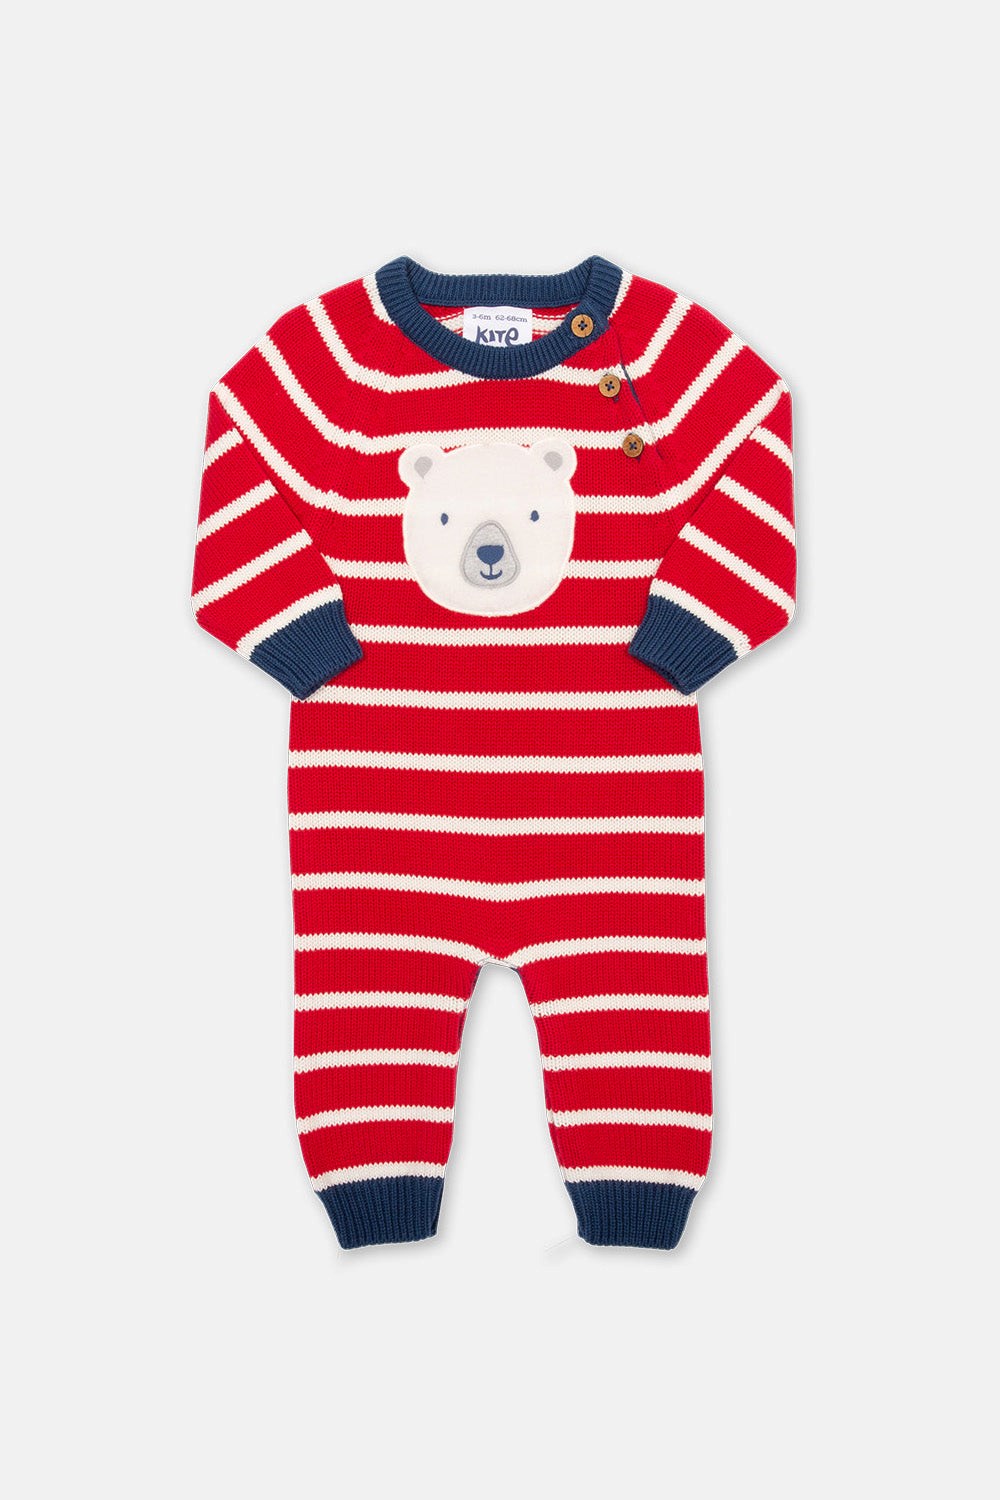 Mr Bear Baby Organic Cotton Knit Romper -